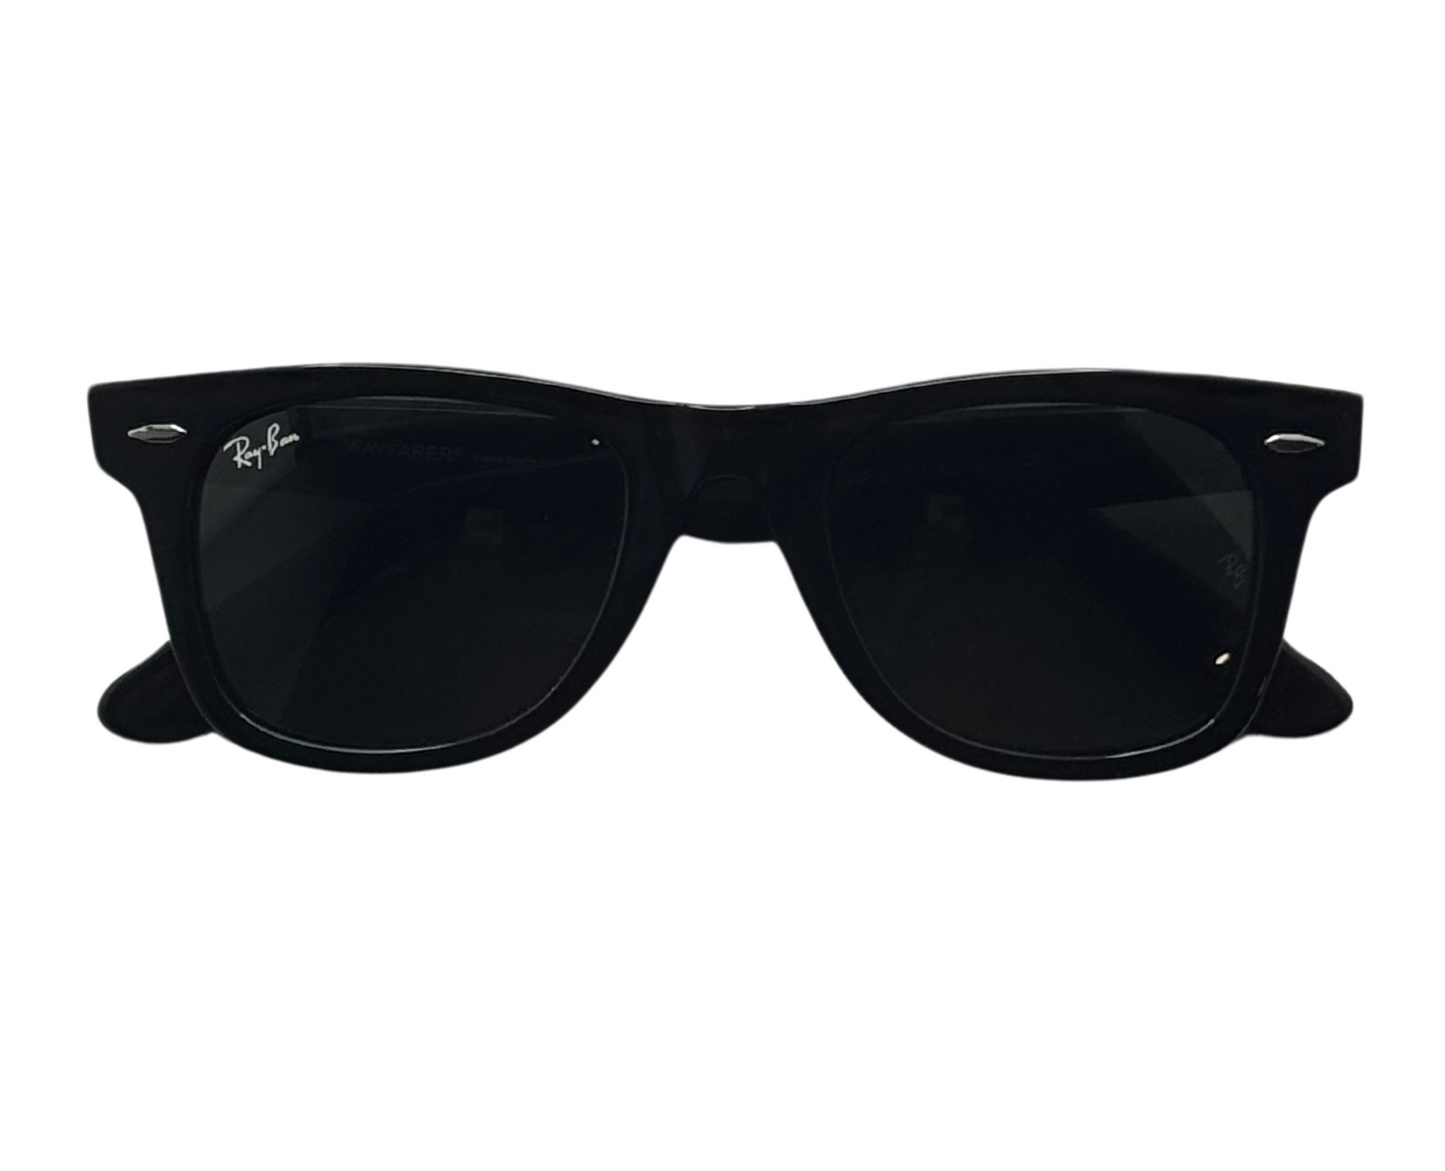 NS Luxury - 2140 - 901 - Sunglasses